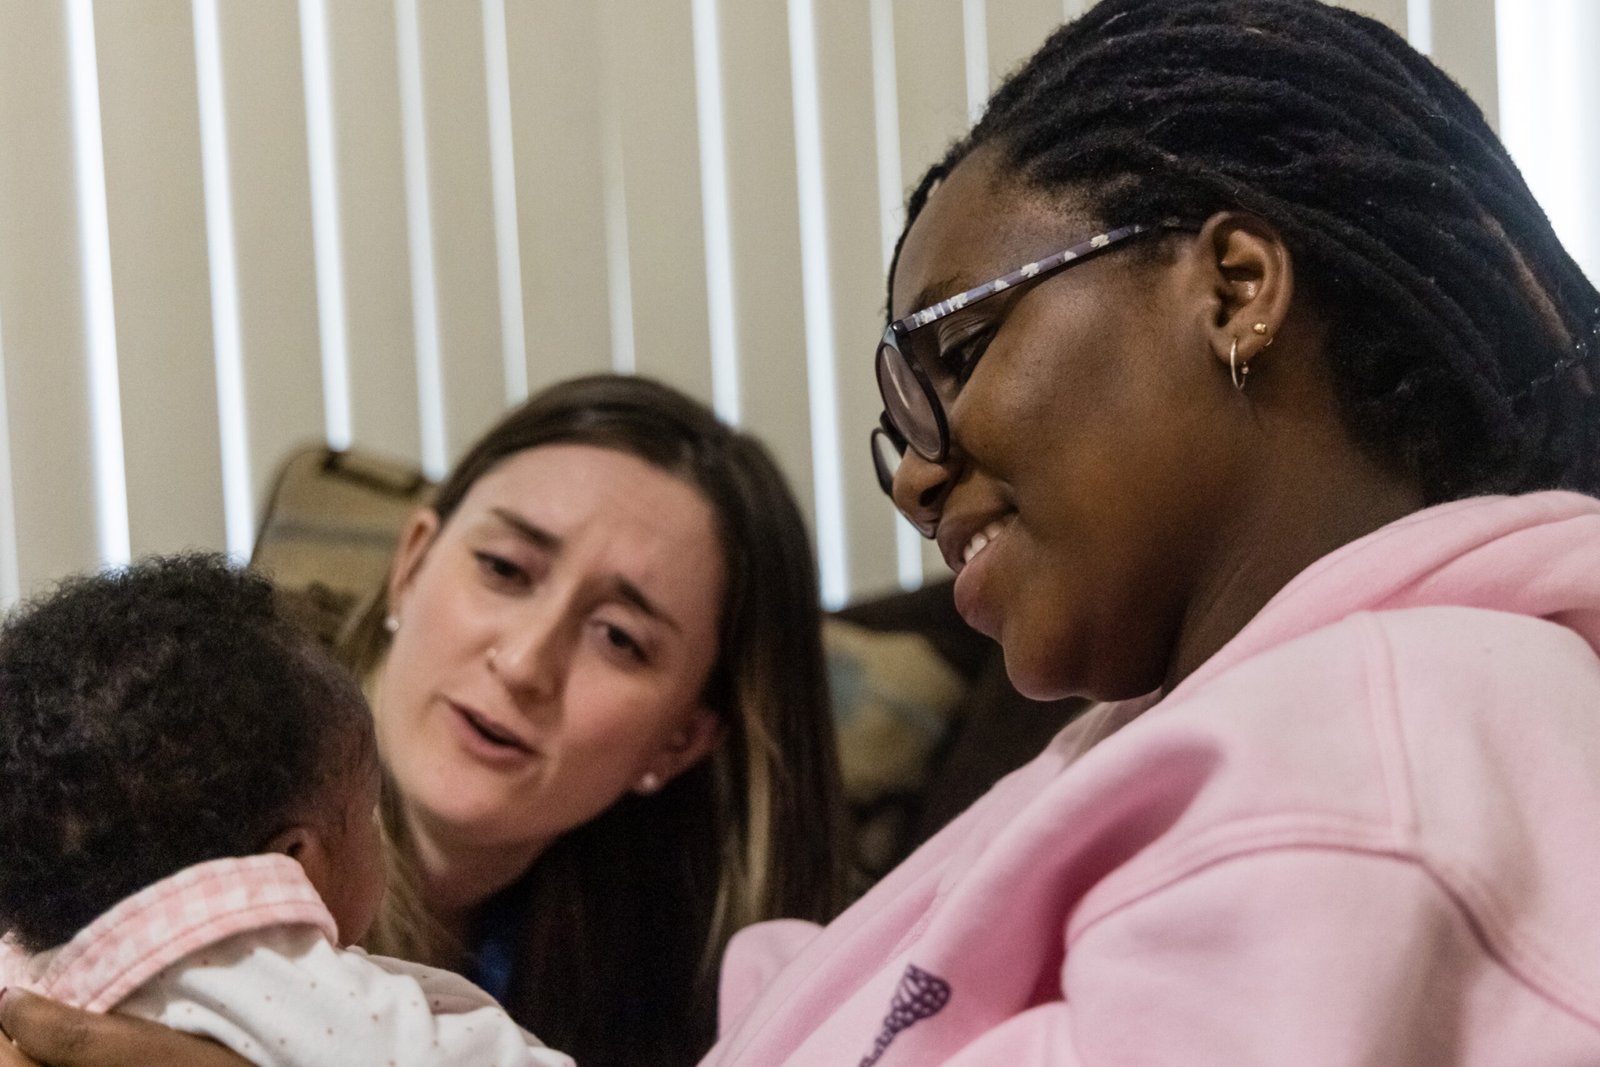 Boise area now has a program where new moms ‘take a nurse